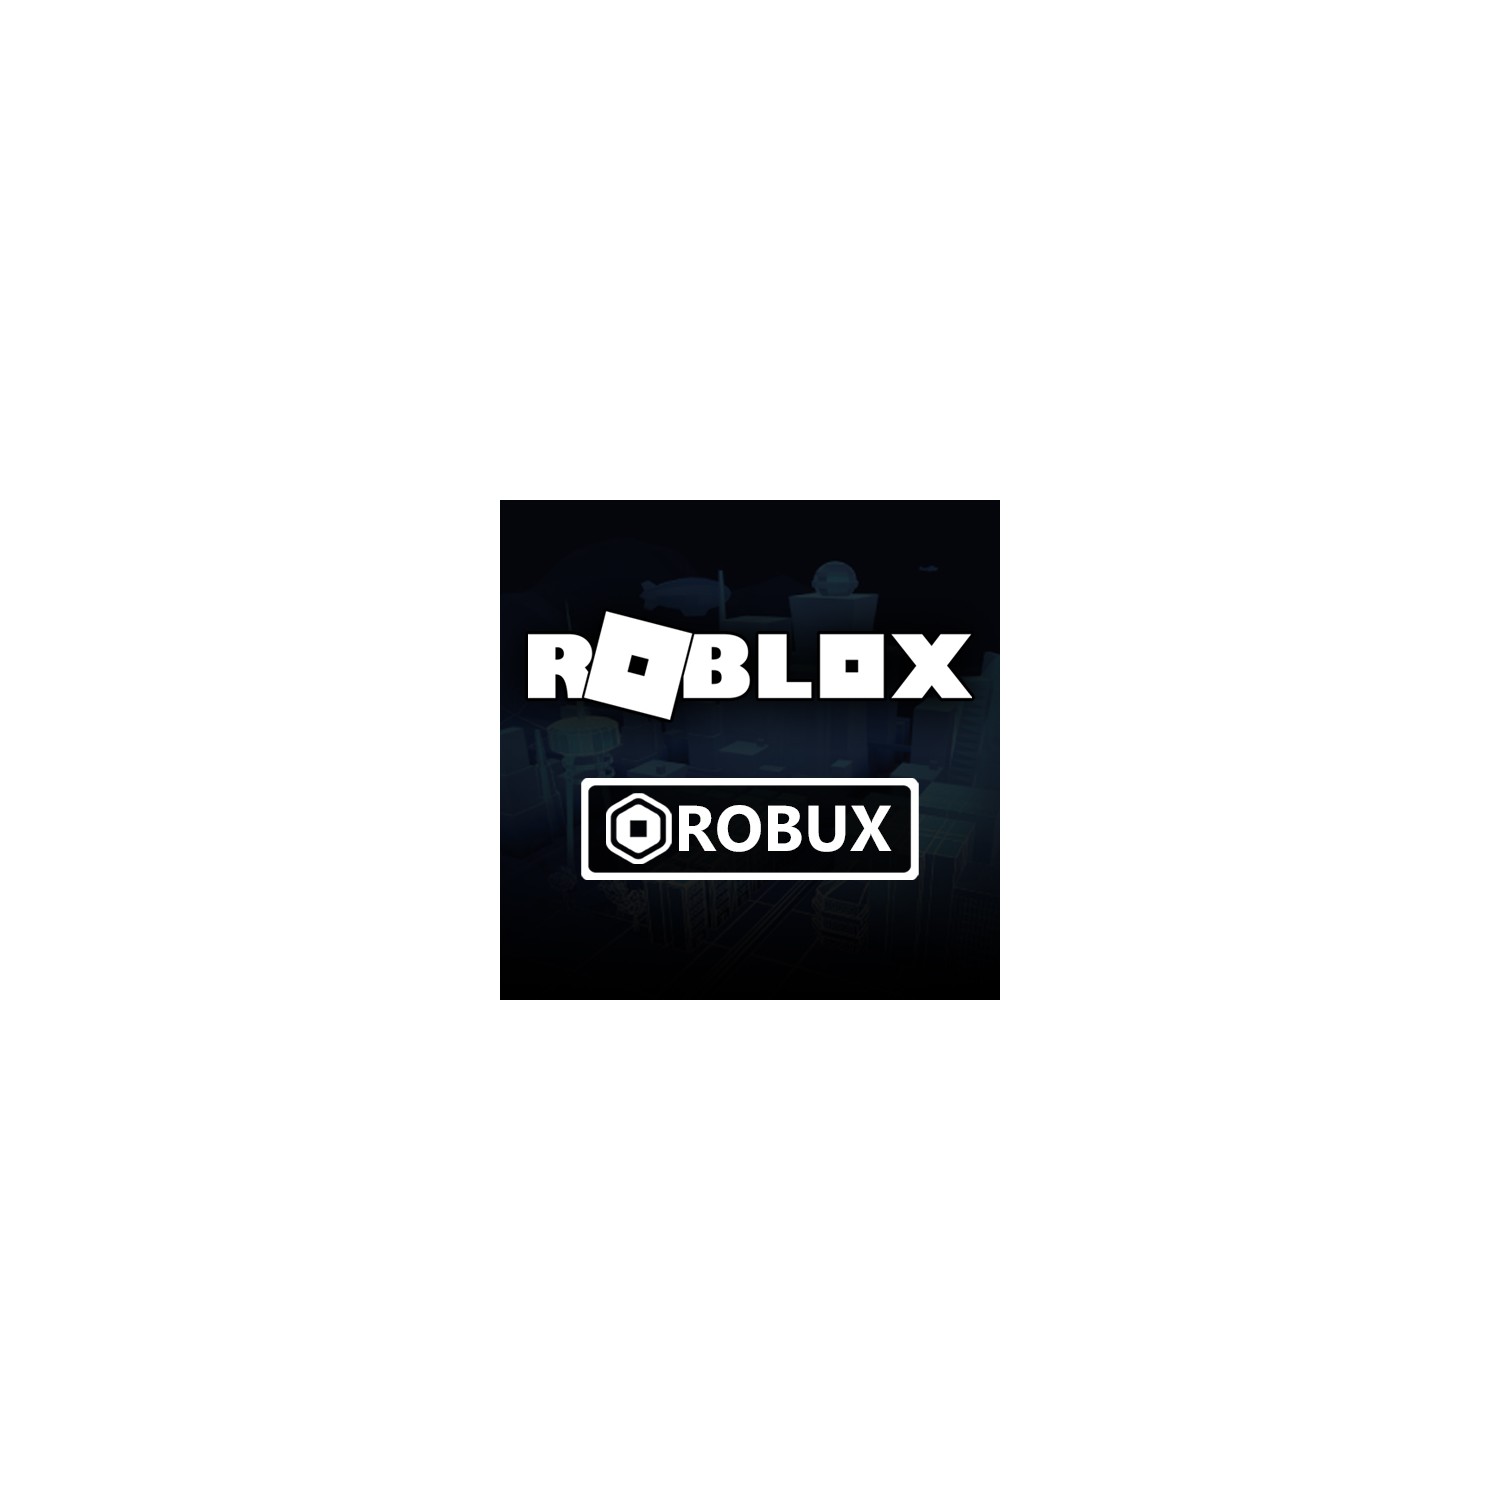 Roblox 800 Robux Fiyati Taksit Secenekleri Ile Satin Al - 800 robux berapa rupiah